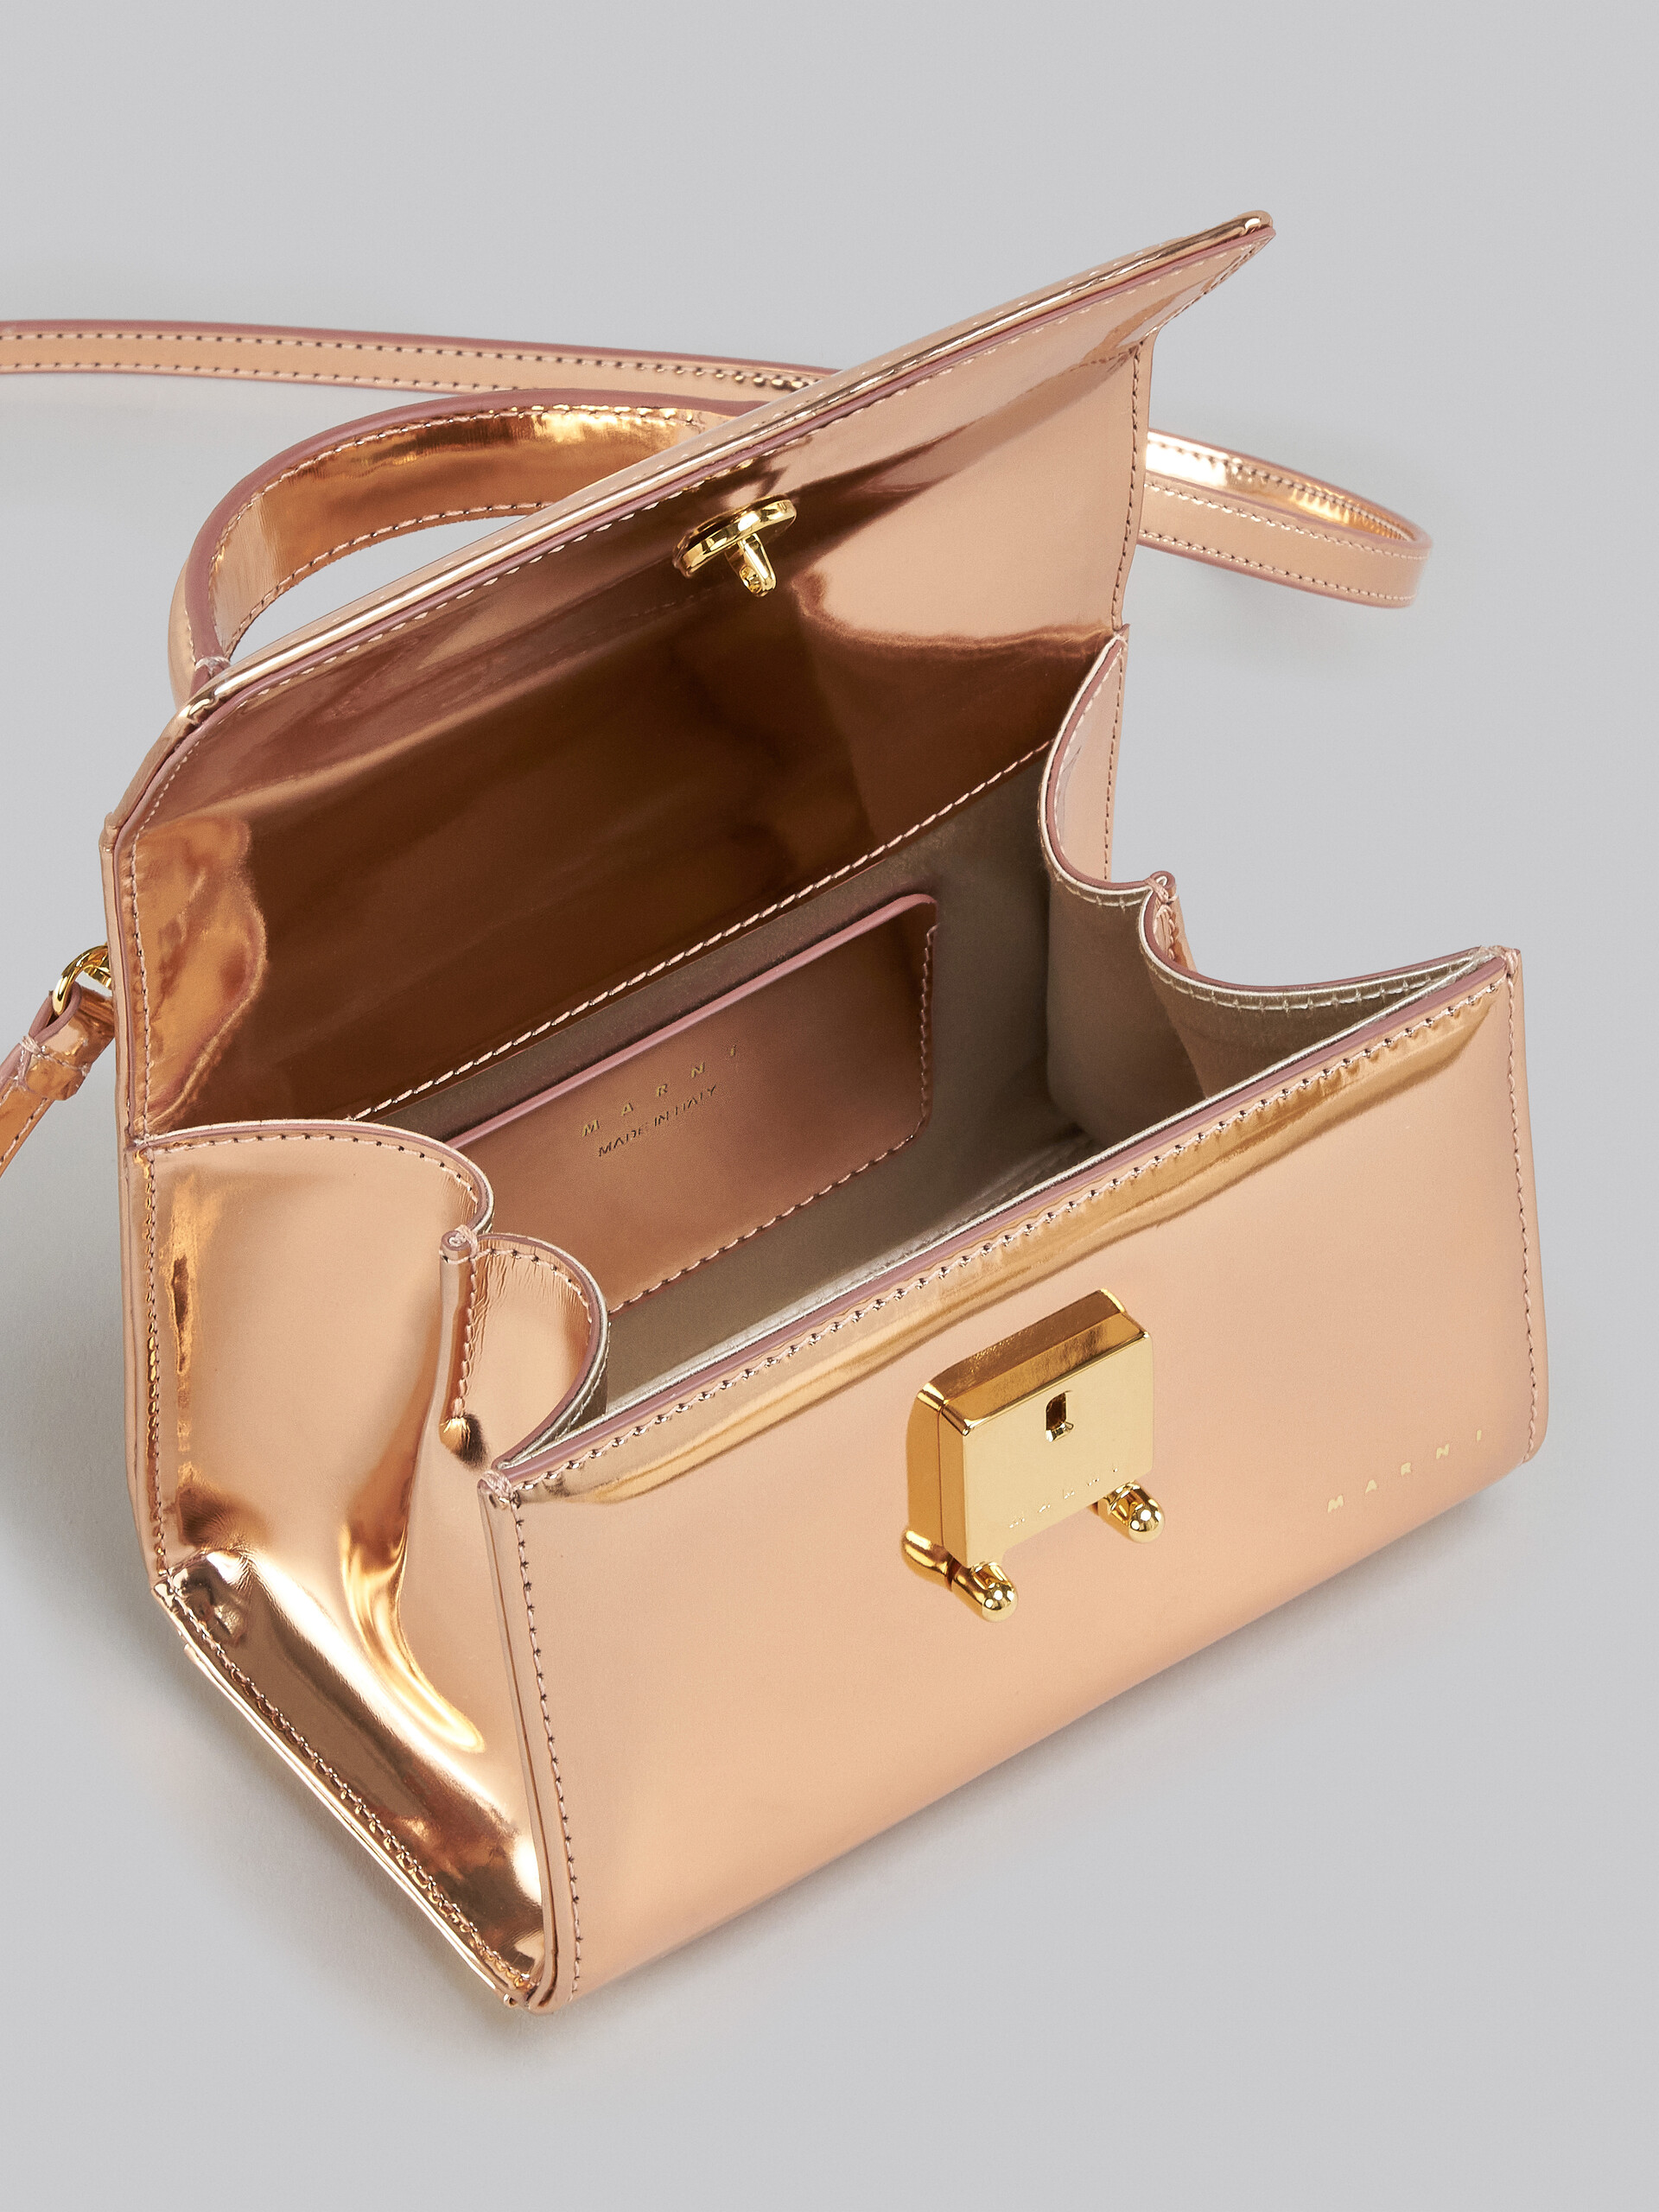 Relativity Mini Bag in pink mirrored leather - Handbag - Image 3